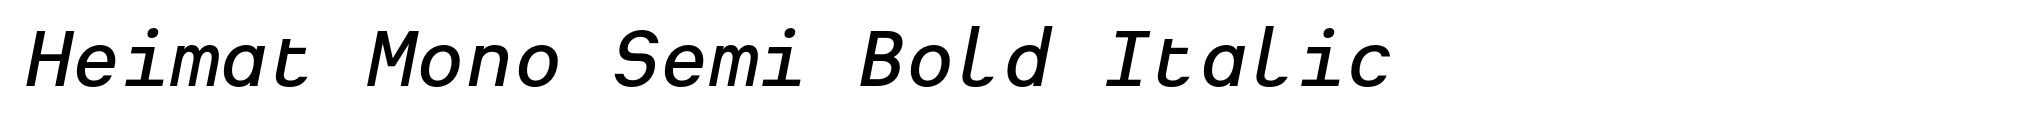 Heimat Mono Semi Bold Italic image